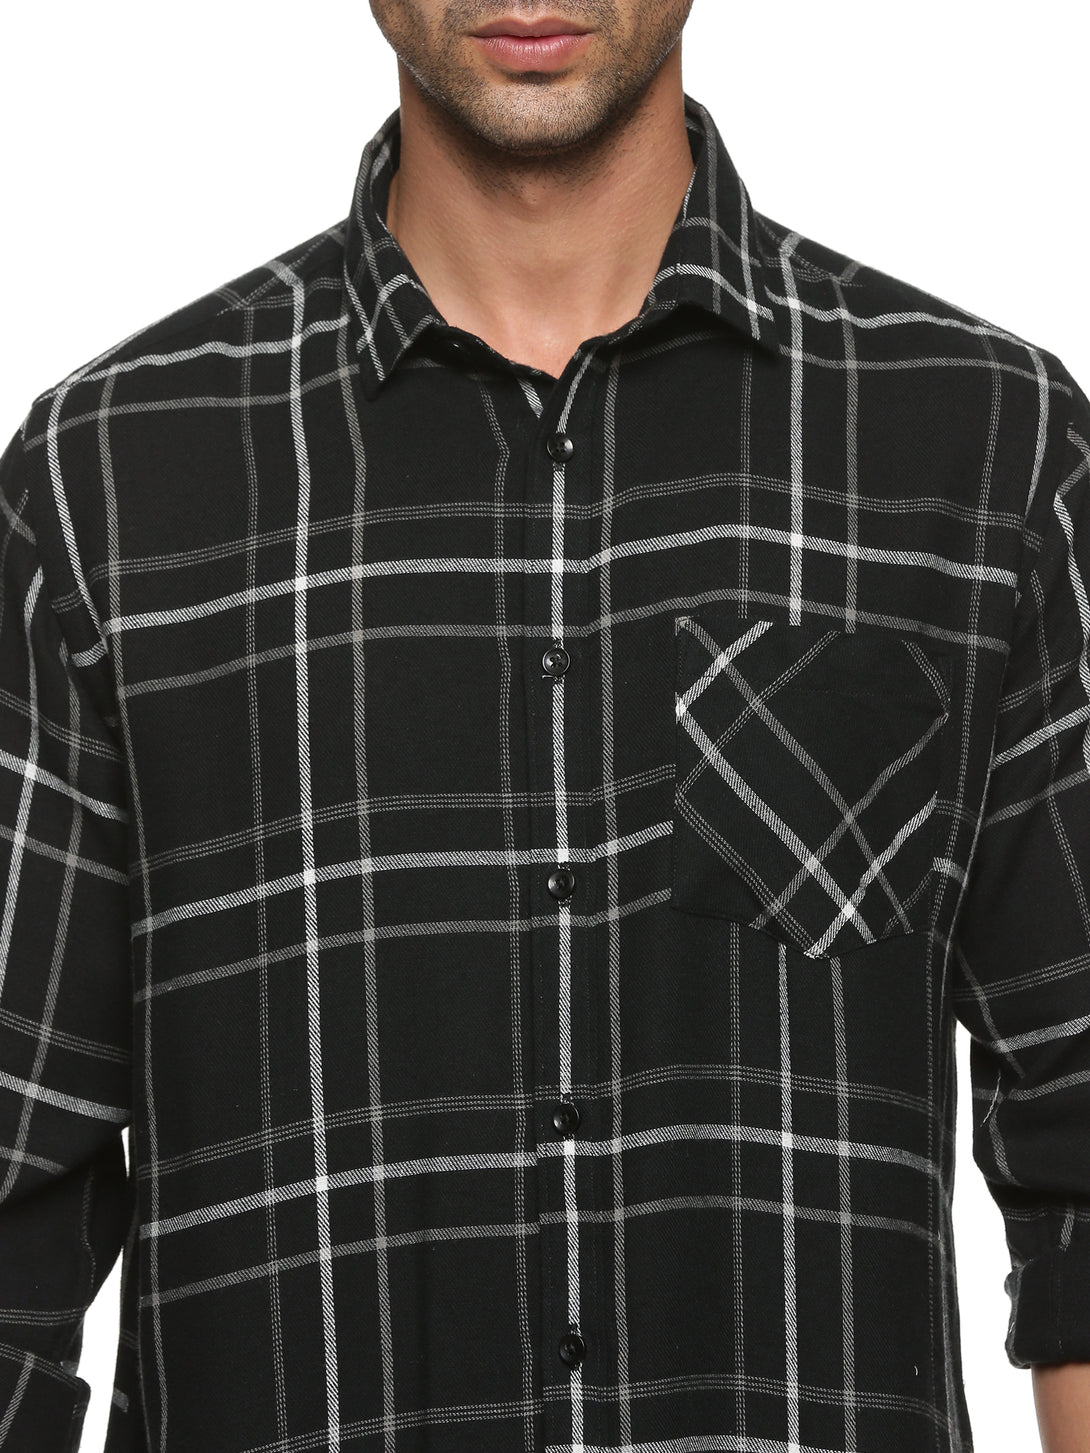 Men Black Checkered Slim Fit Casual Shirt